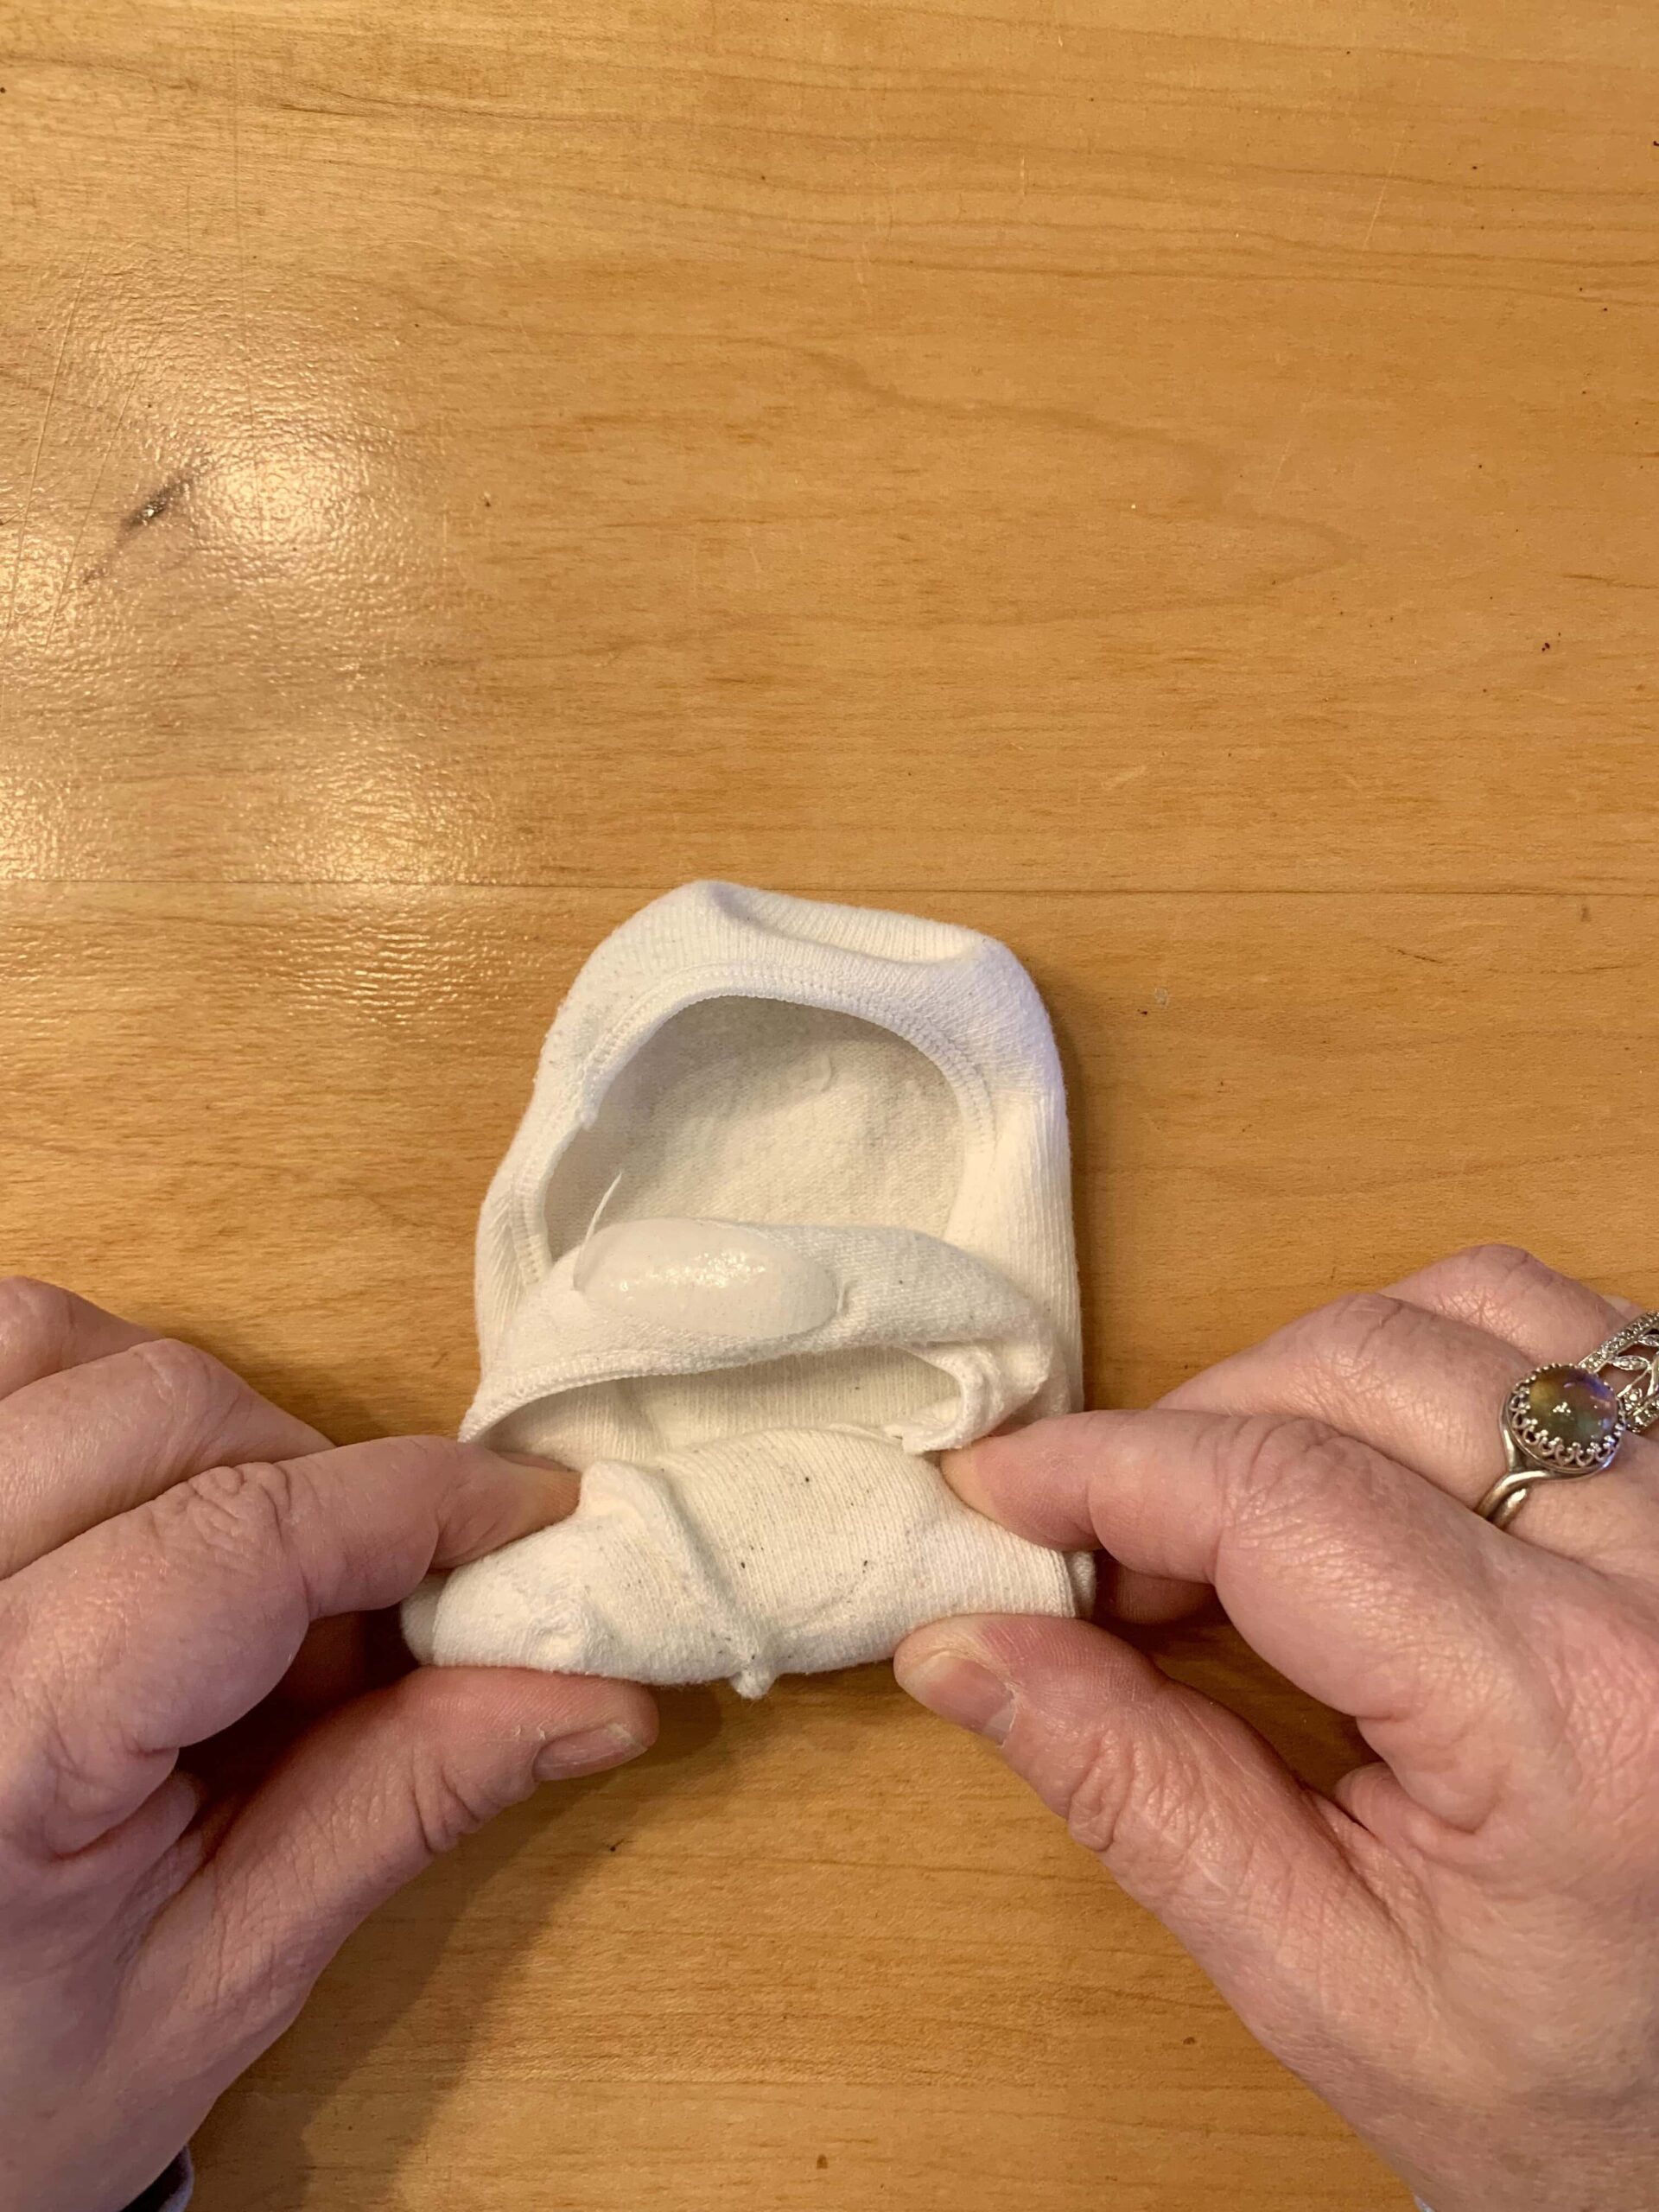 How to fold no show socks